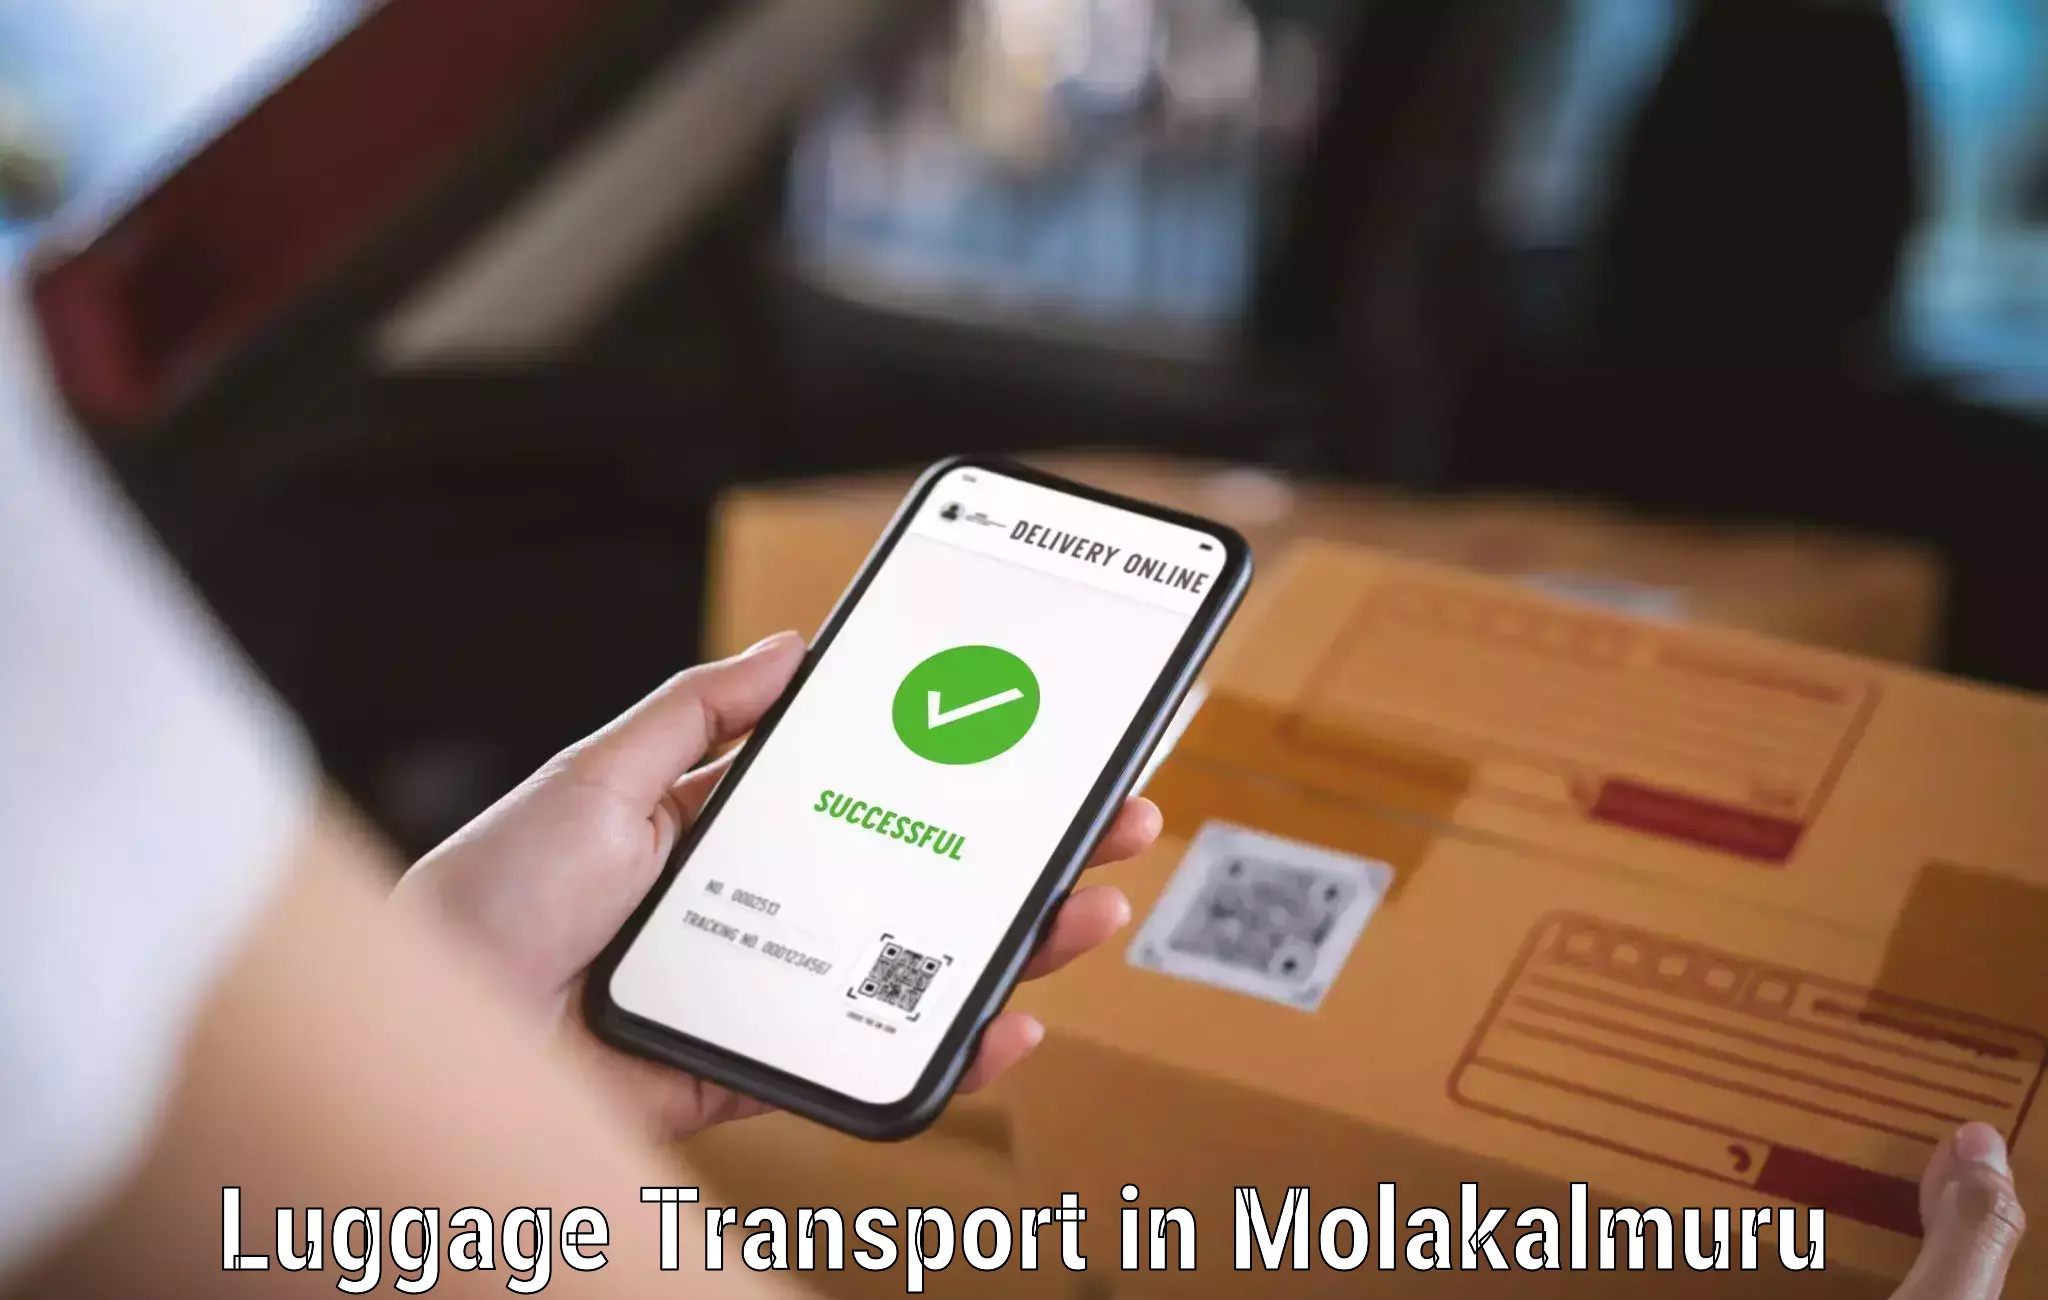 Luggage delivery network in Molakalmuru